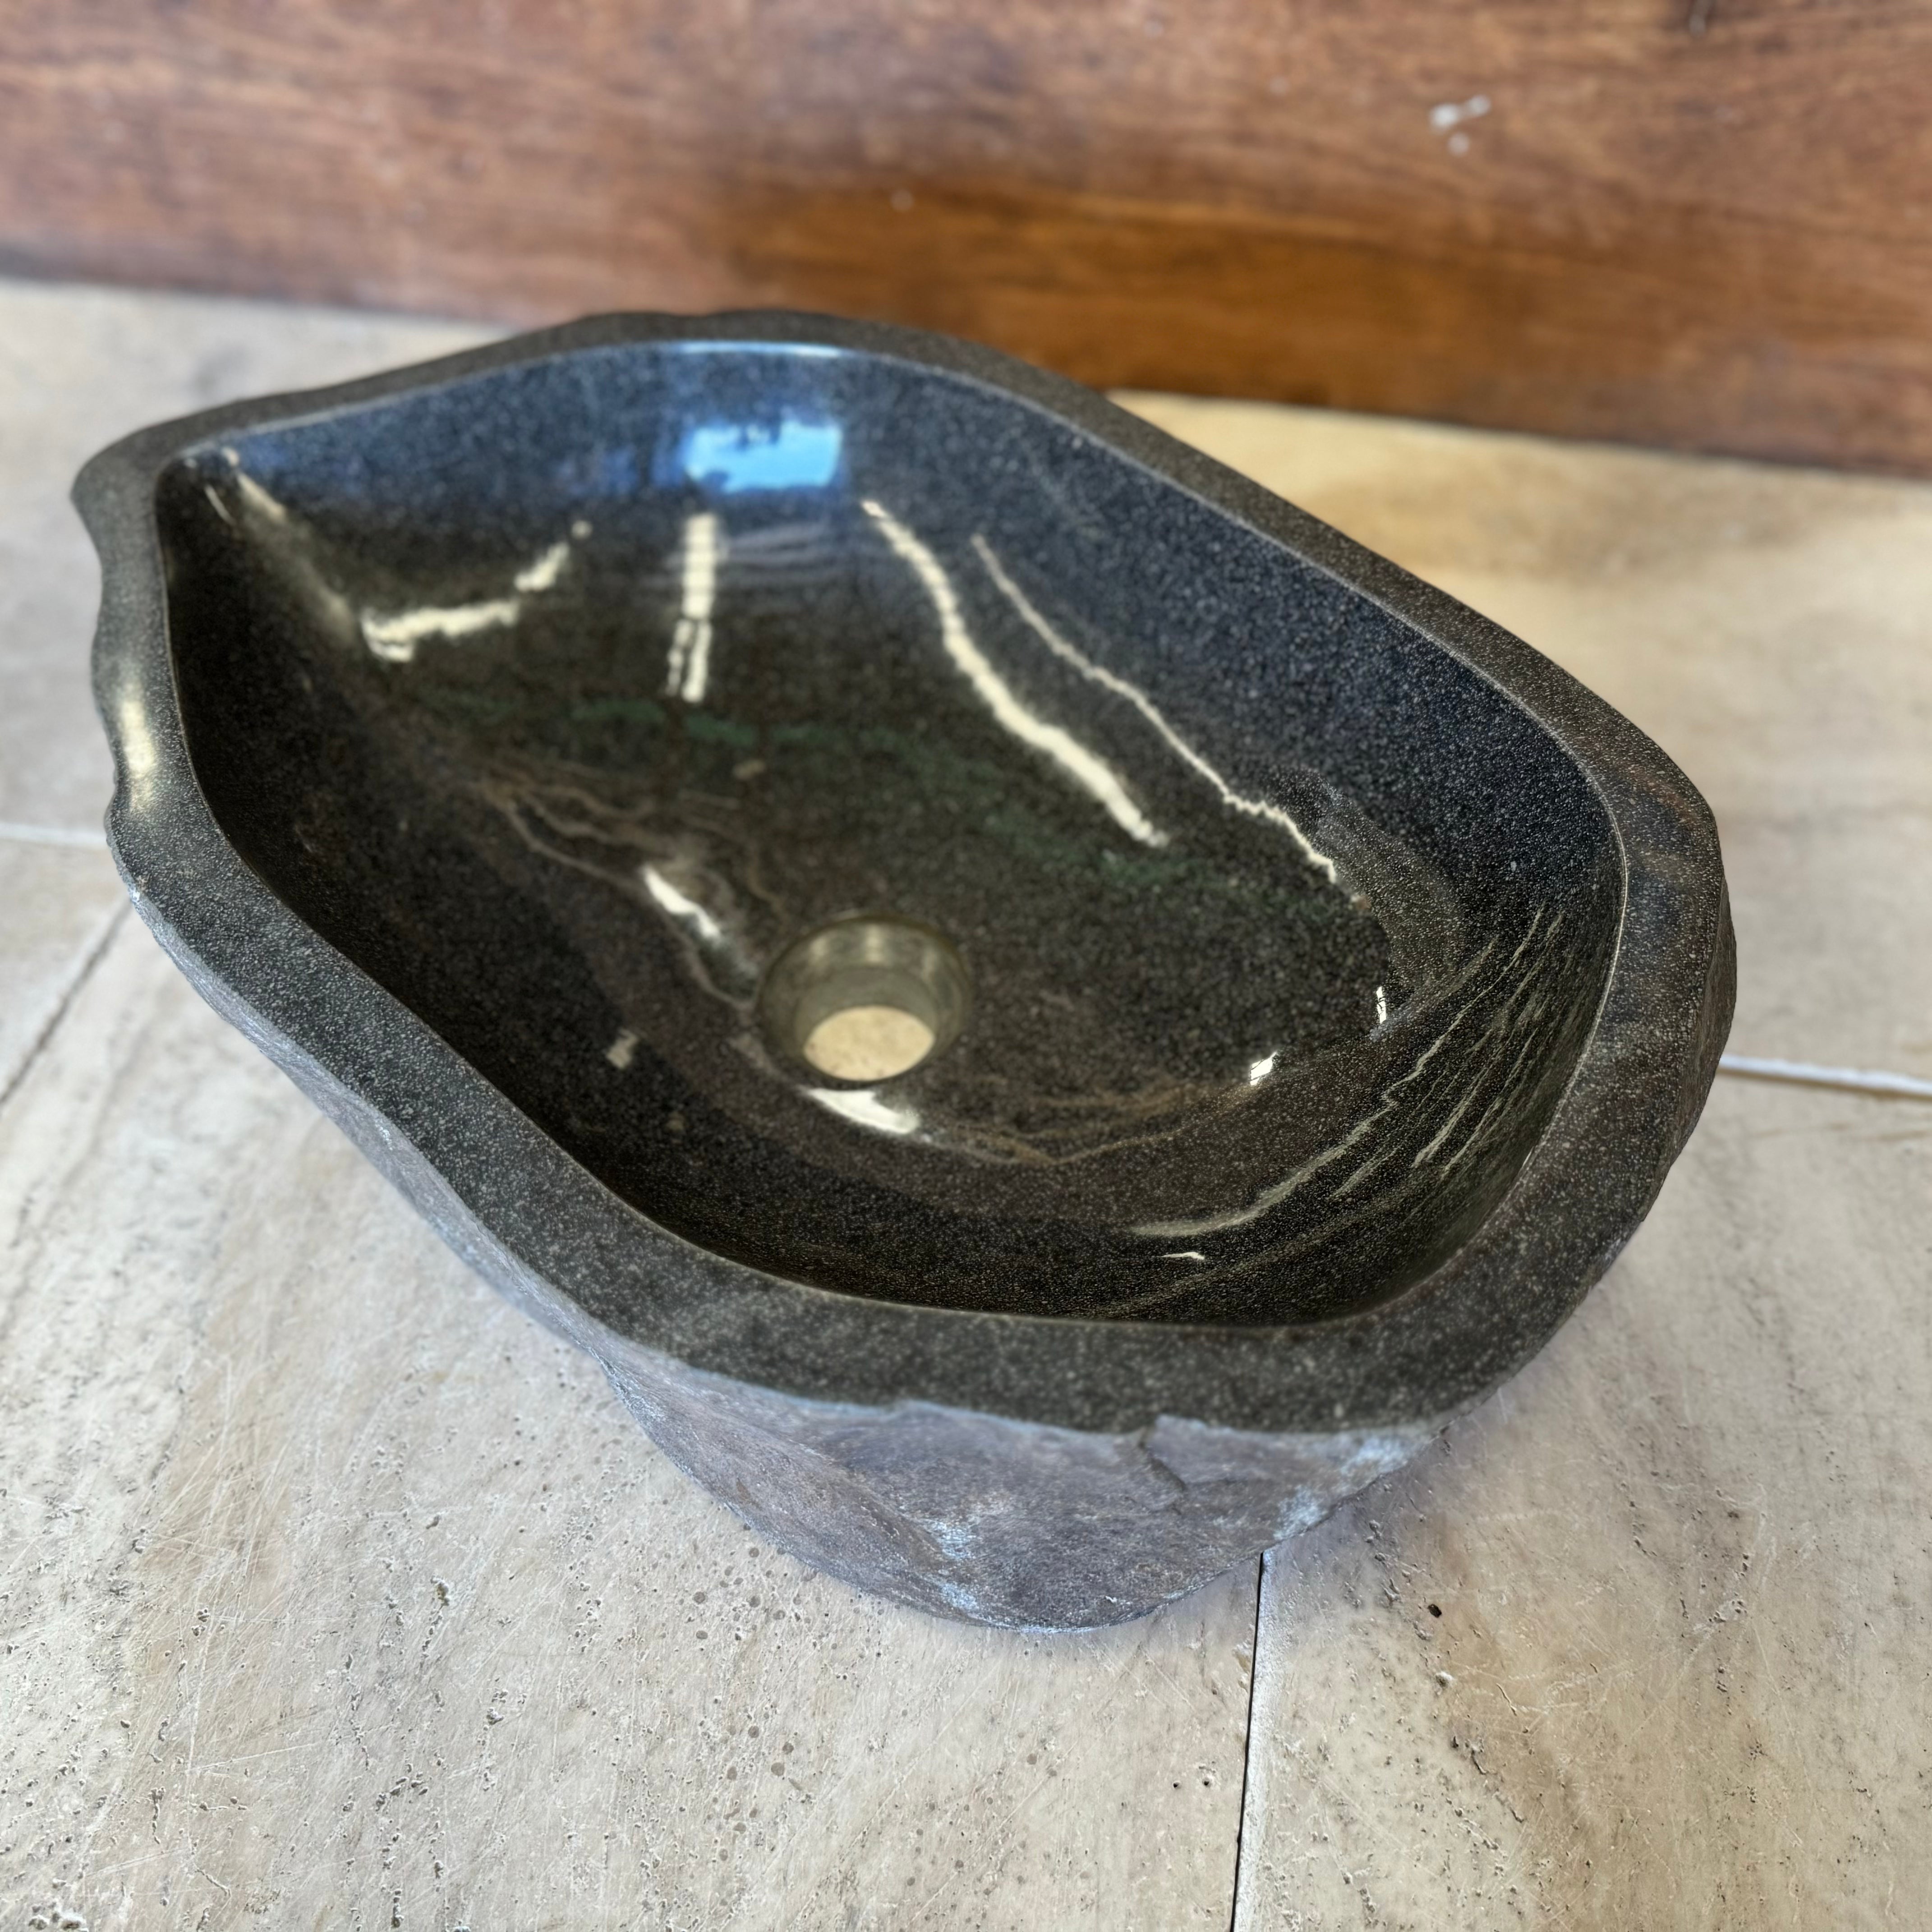 Handmade Natural Oval River Stone Bathroom Basin - RM2306037